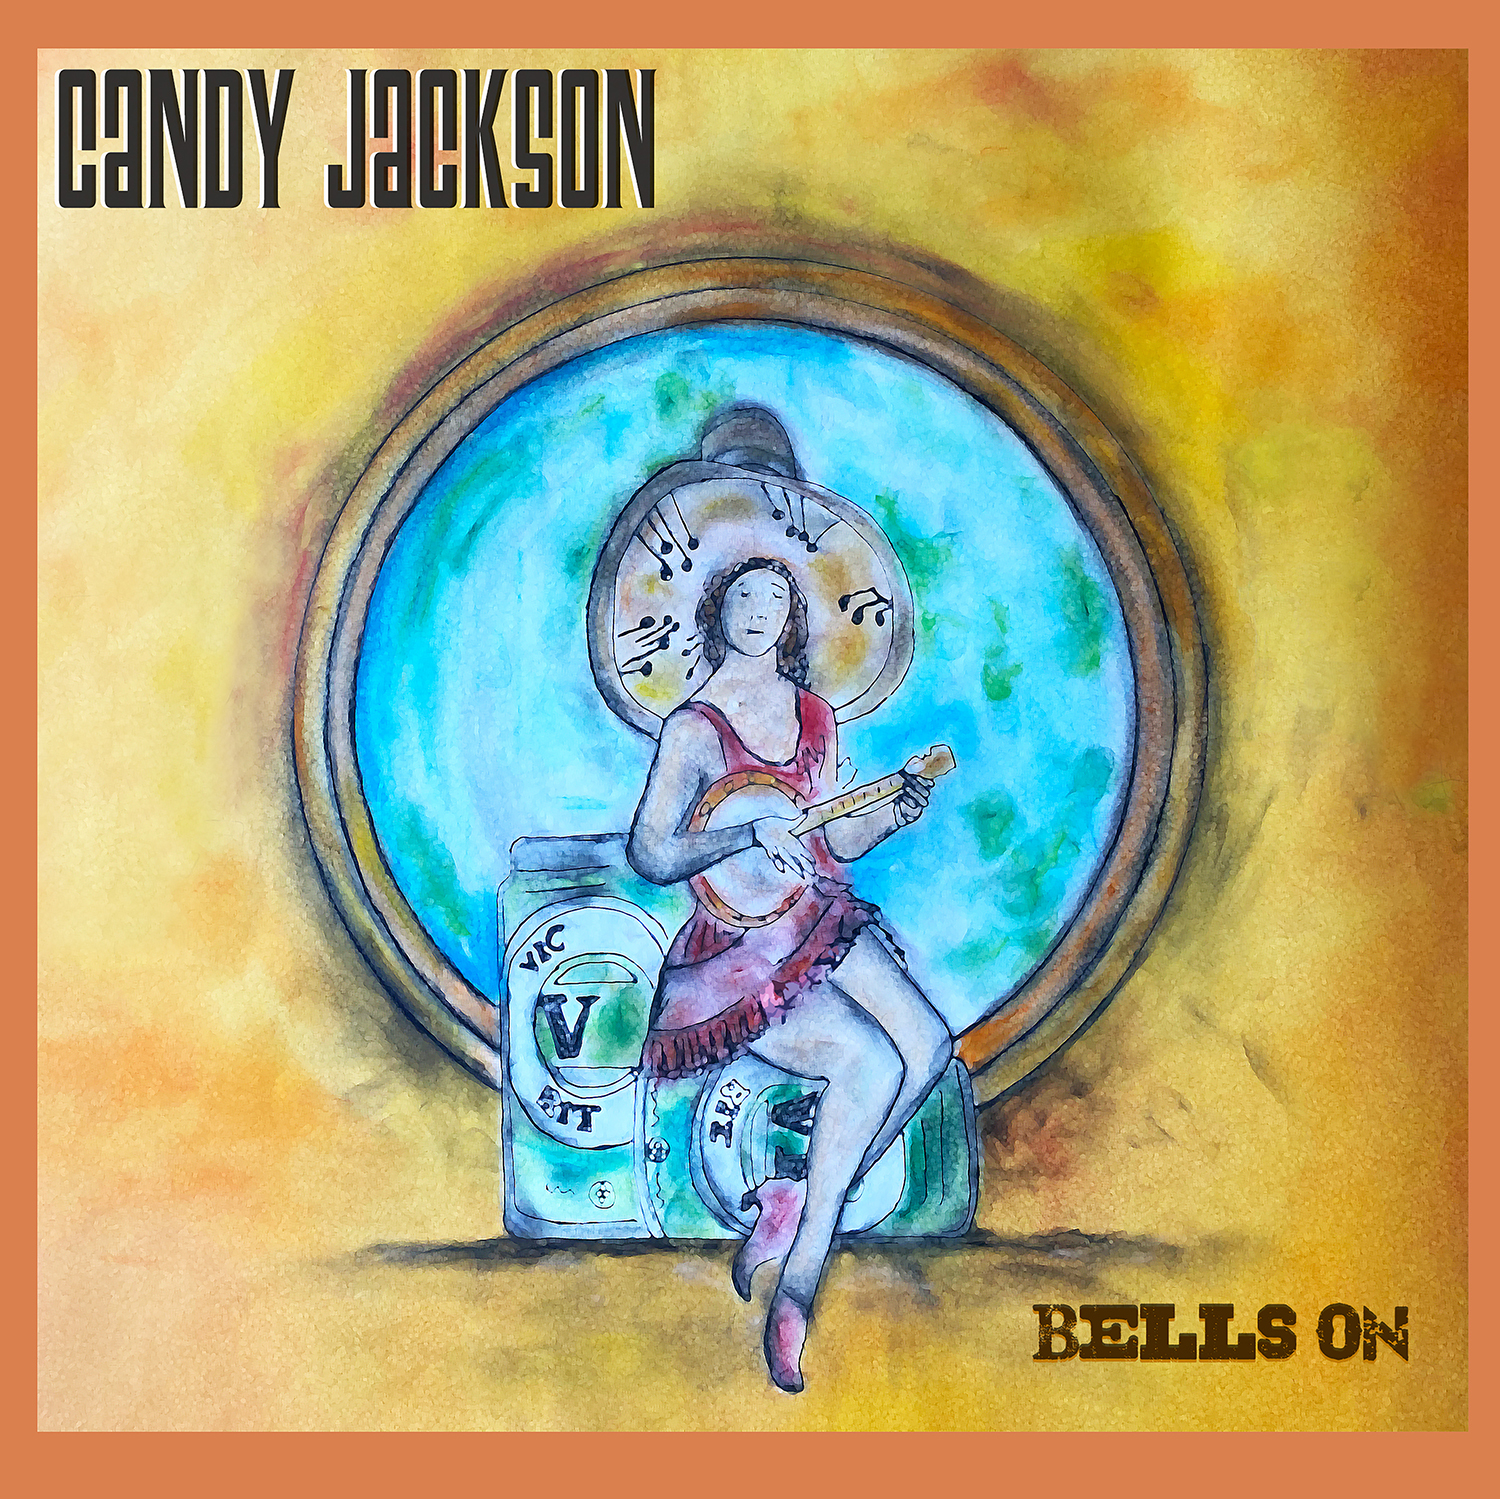 Candy Jackson – Introducing